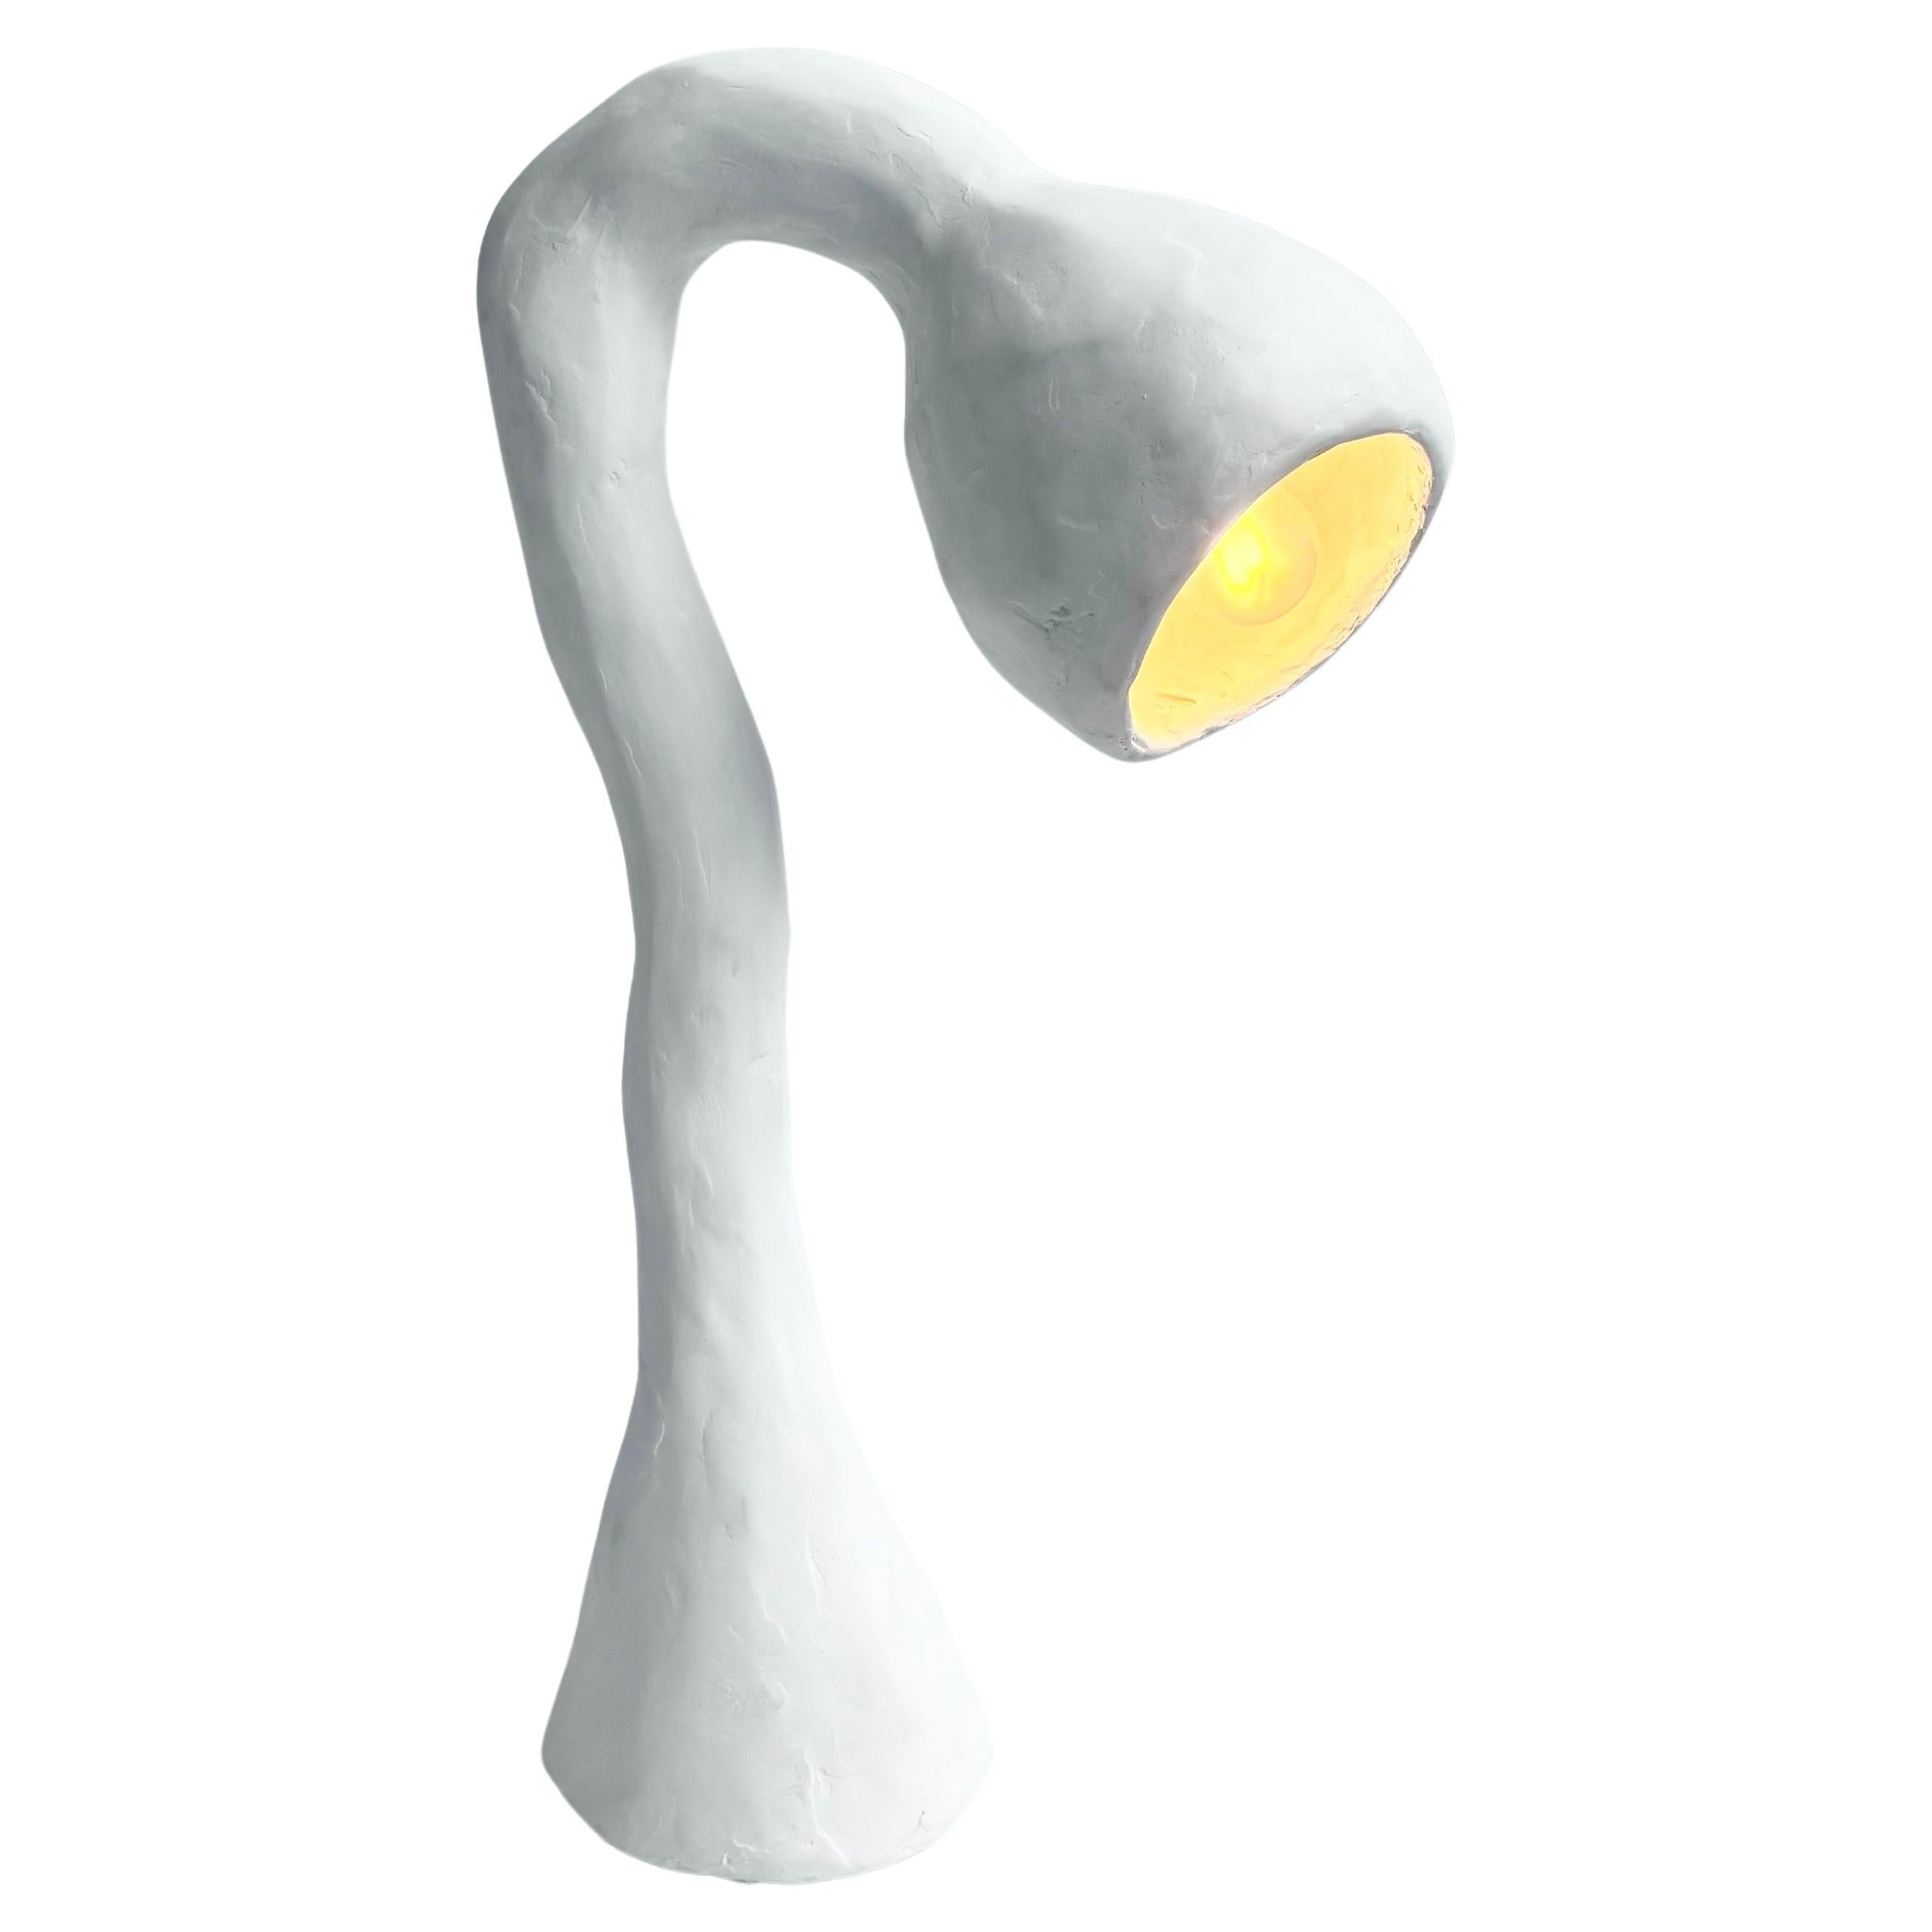 Lampe de bureau Biomorphic Line de Studio Chora, pierre calcaire blanche, en stock en vente